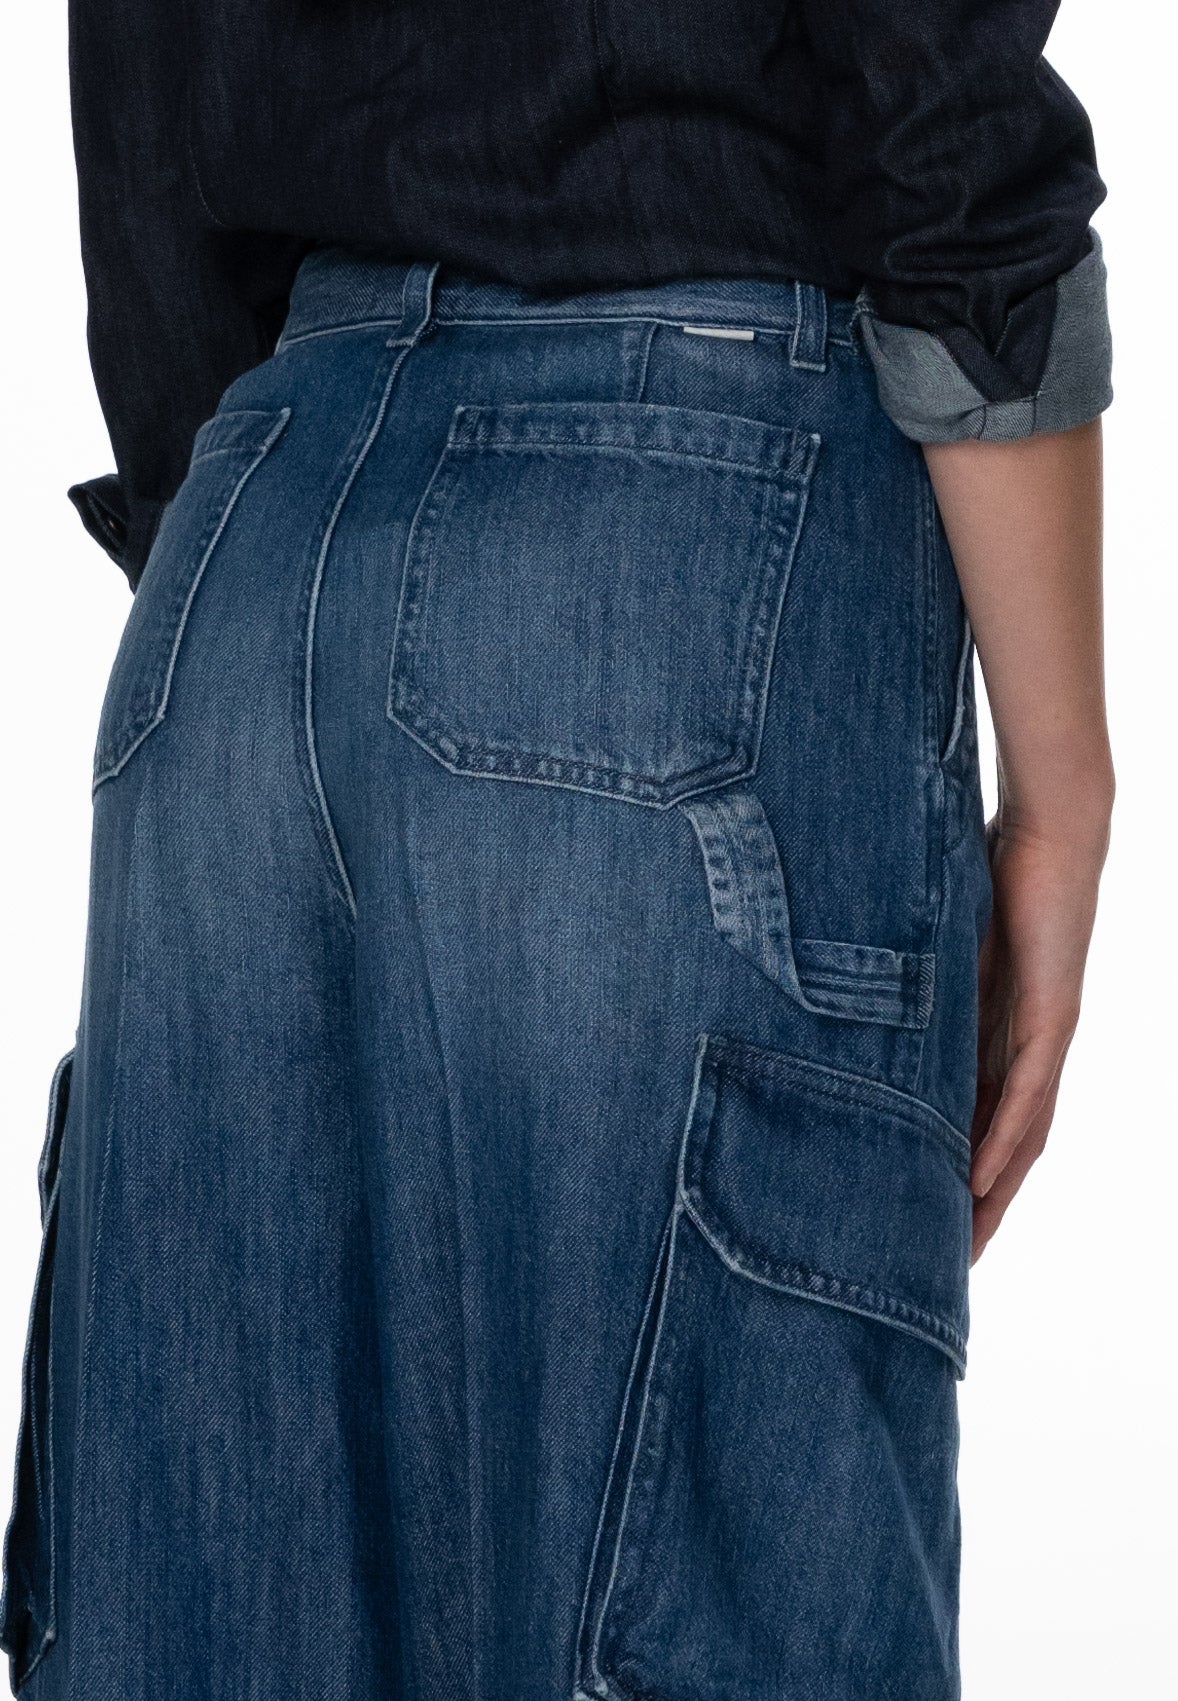 Hilary jeans